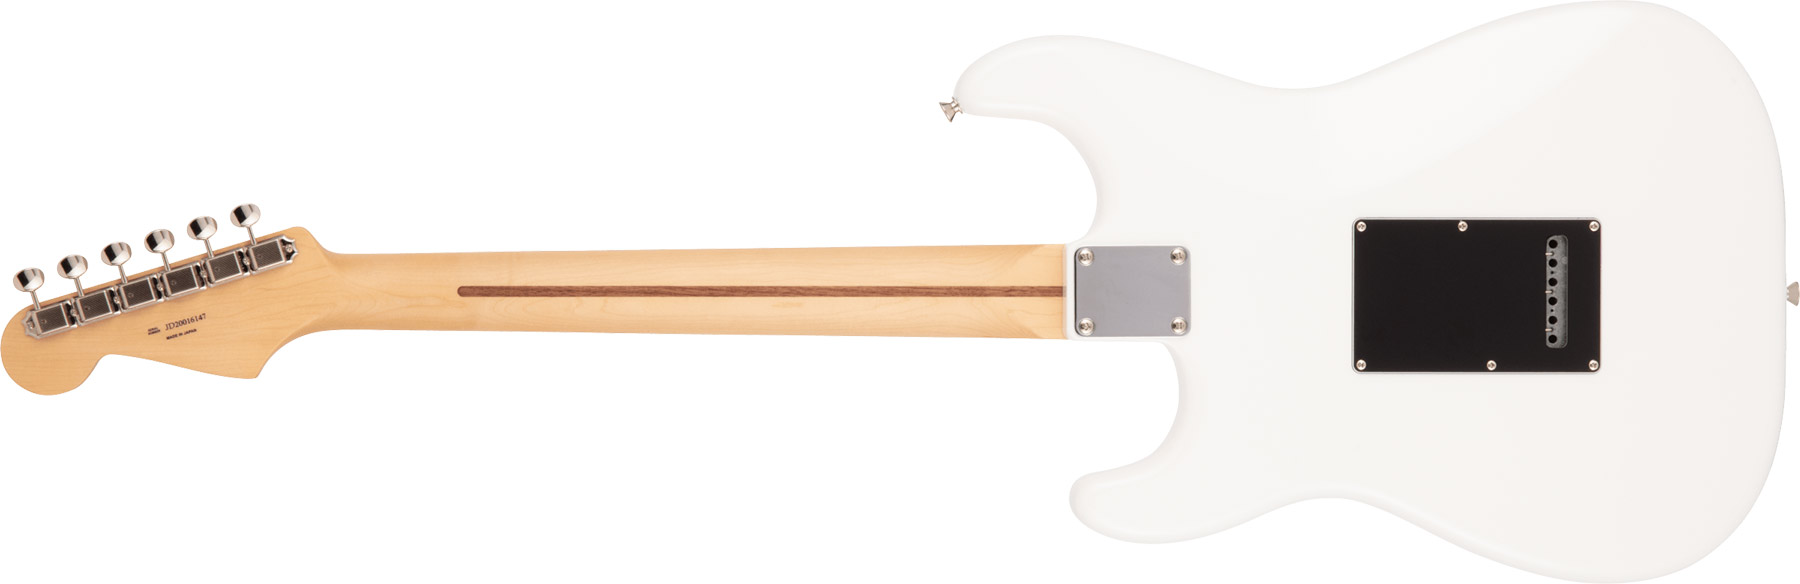 Fender Strat Hybrid Ii Mij Jap 3s Trem Mn - Arctic White - E-Gitarre in Str-Form - Variation 1